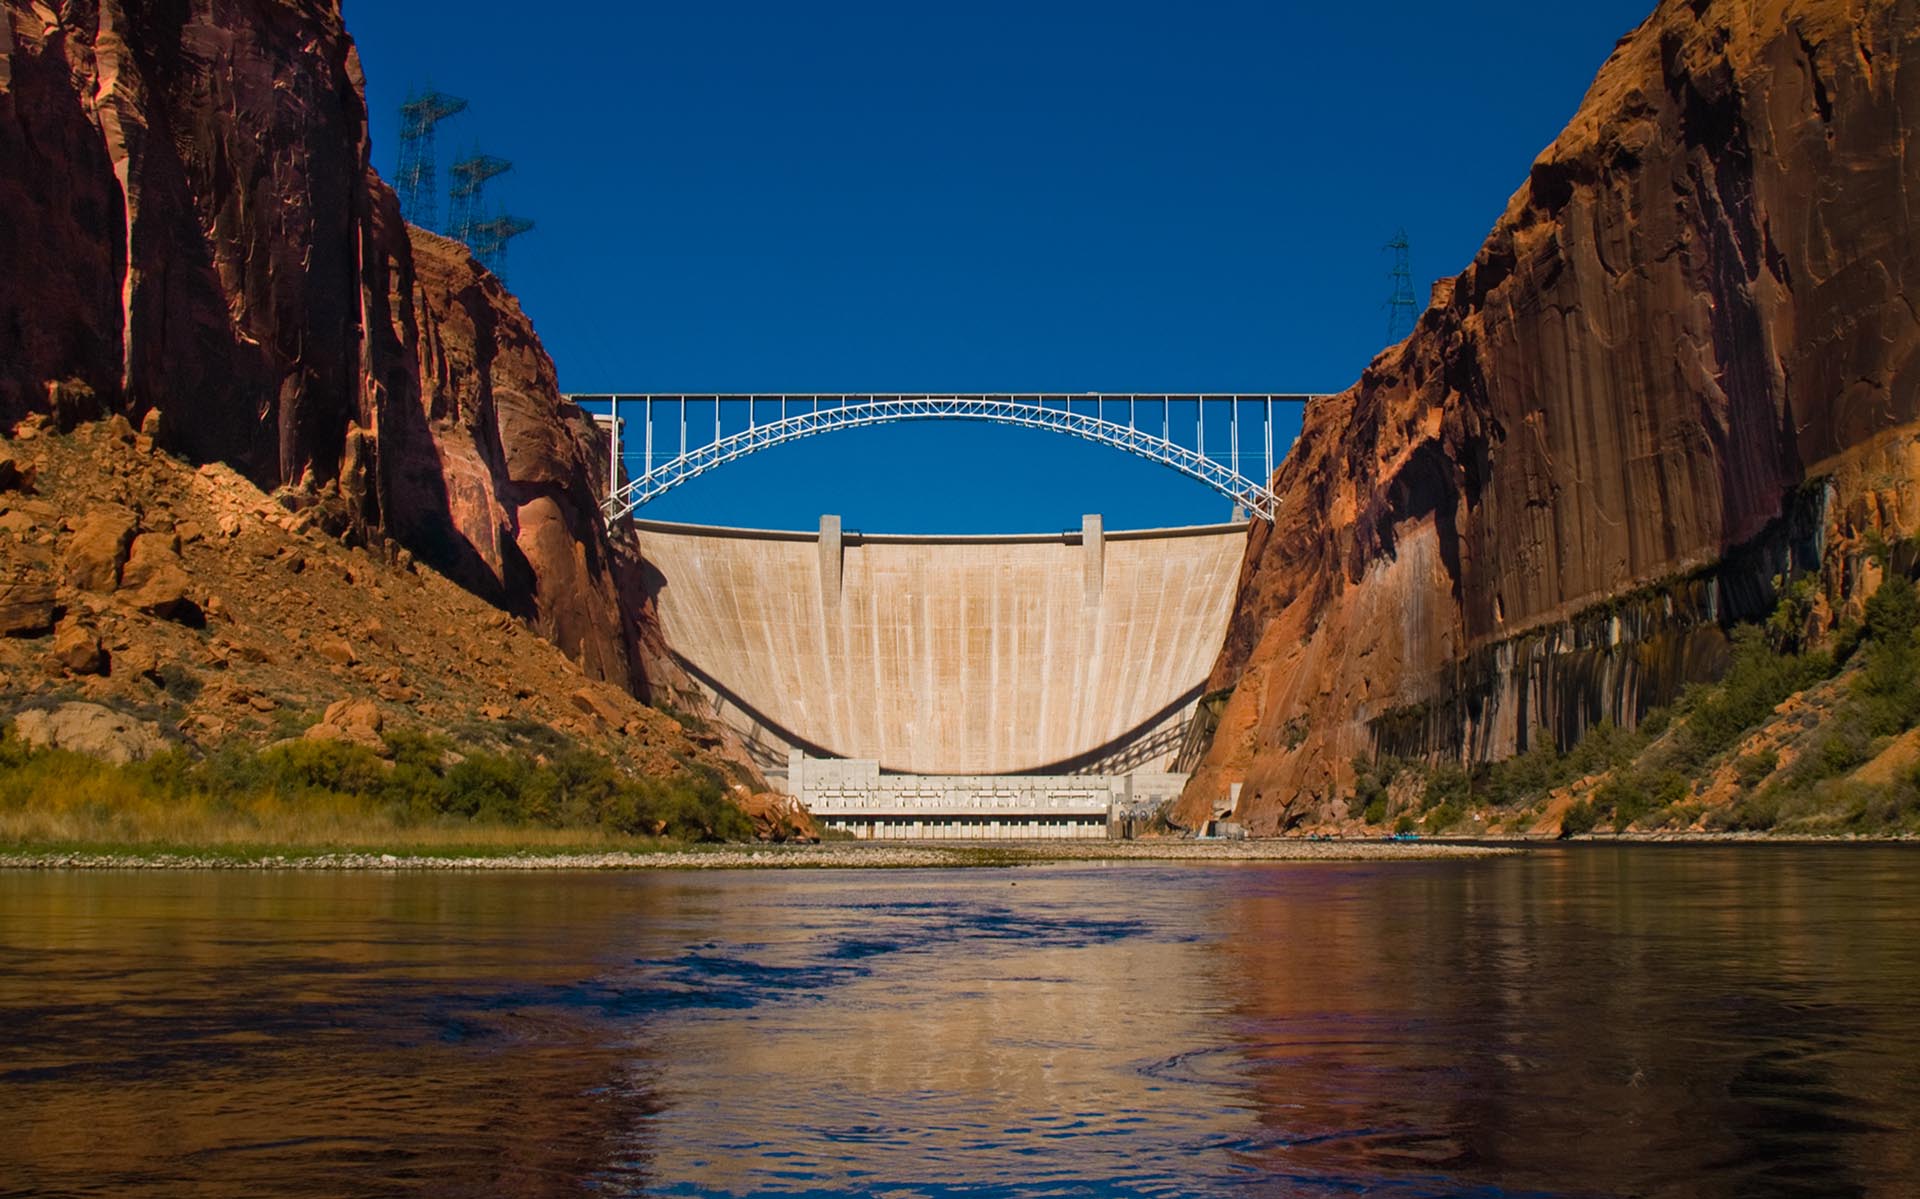 Glen Canyon Dam, a concrete arch-gravity dam on the Colorado River in northern Arizona